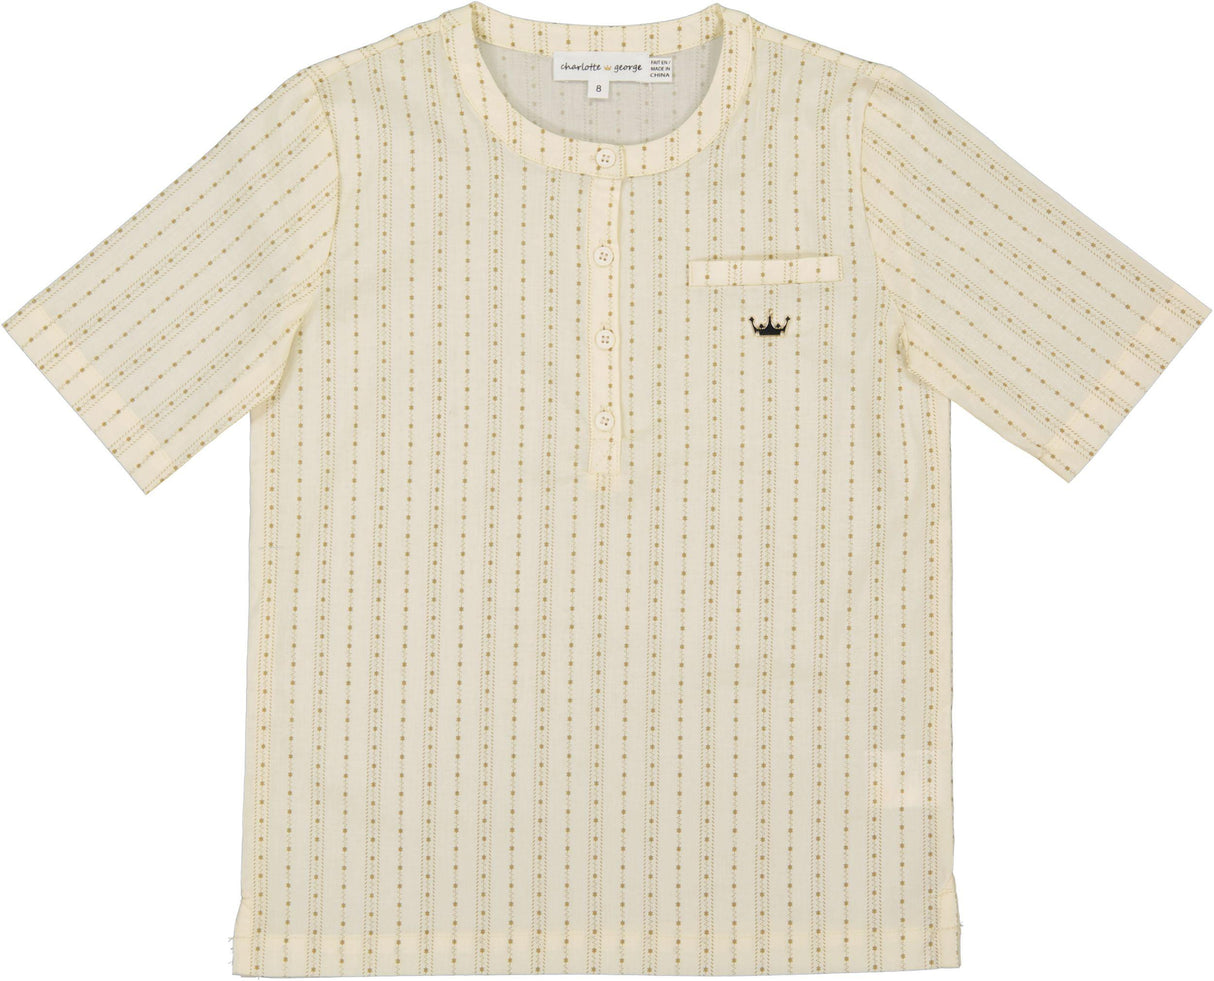 Charlotte & George Boys Short Sleeve Dress Shirt - SB4CP5087S